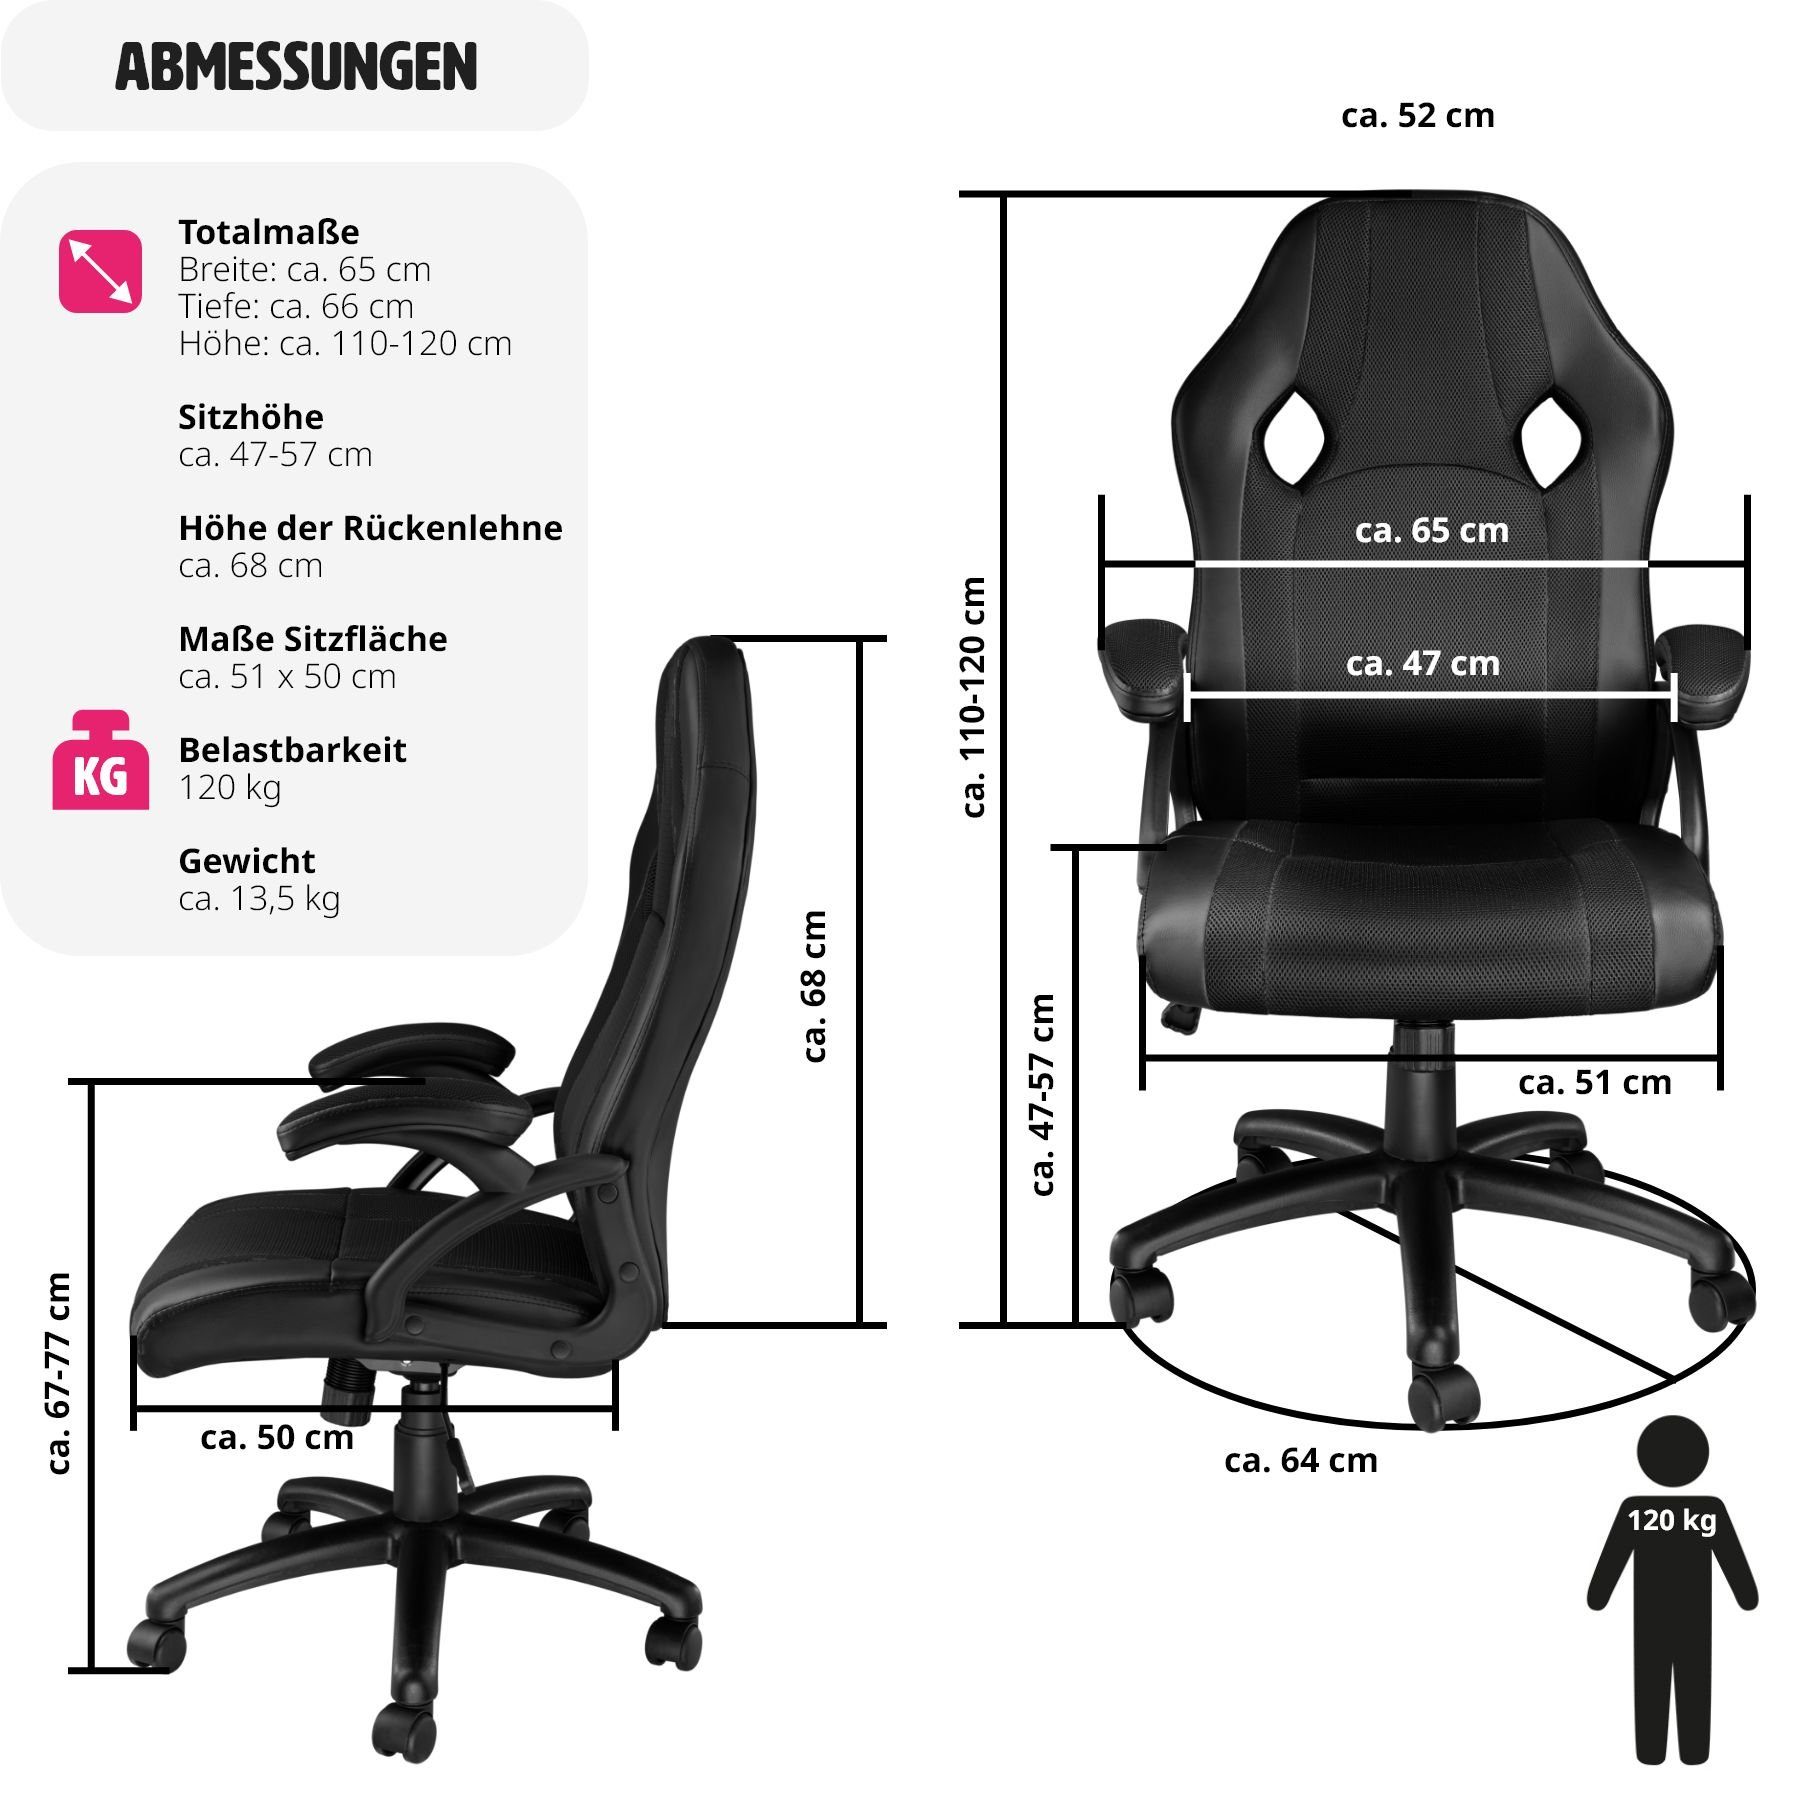 einstellbare (1er, St), Wippmechanik tectake Gaming-Stuhl 1 schwarz Goodman